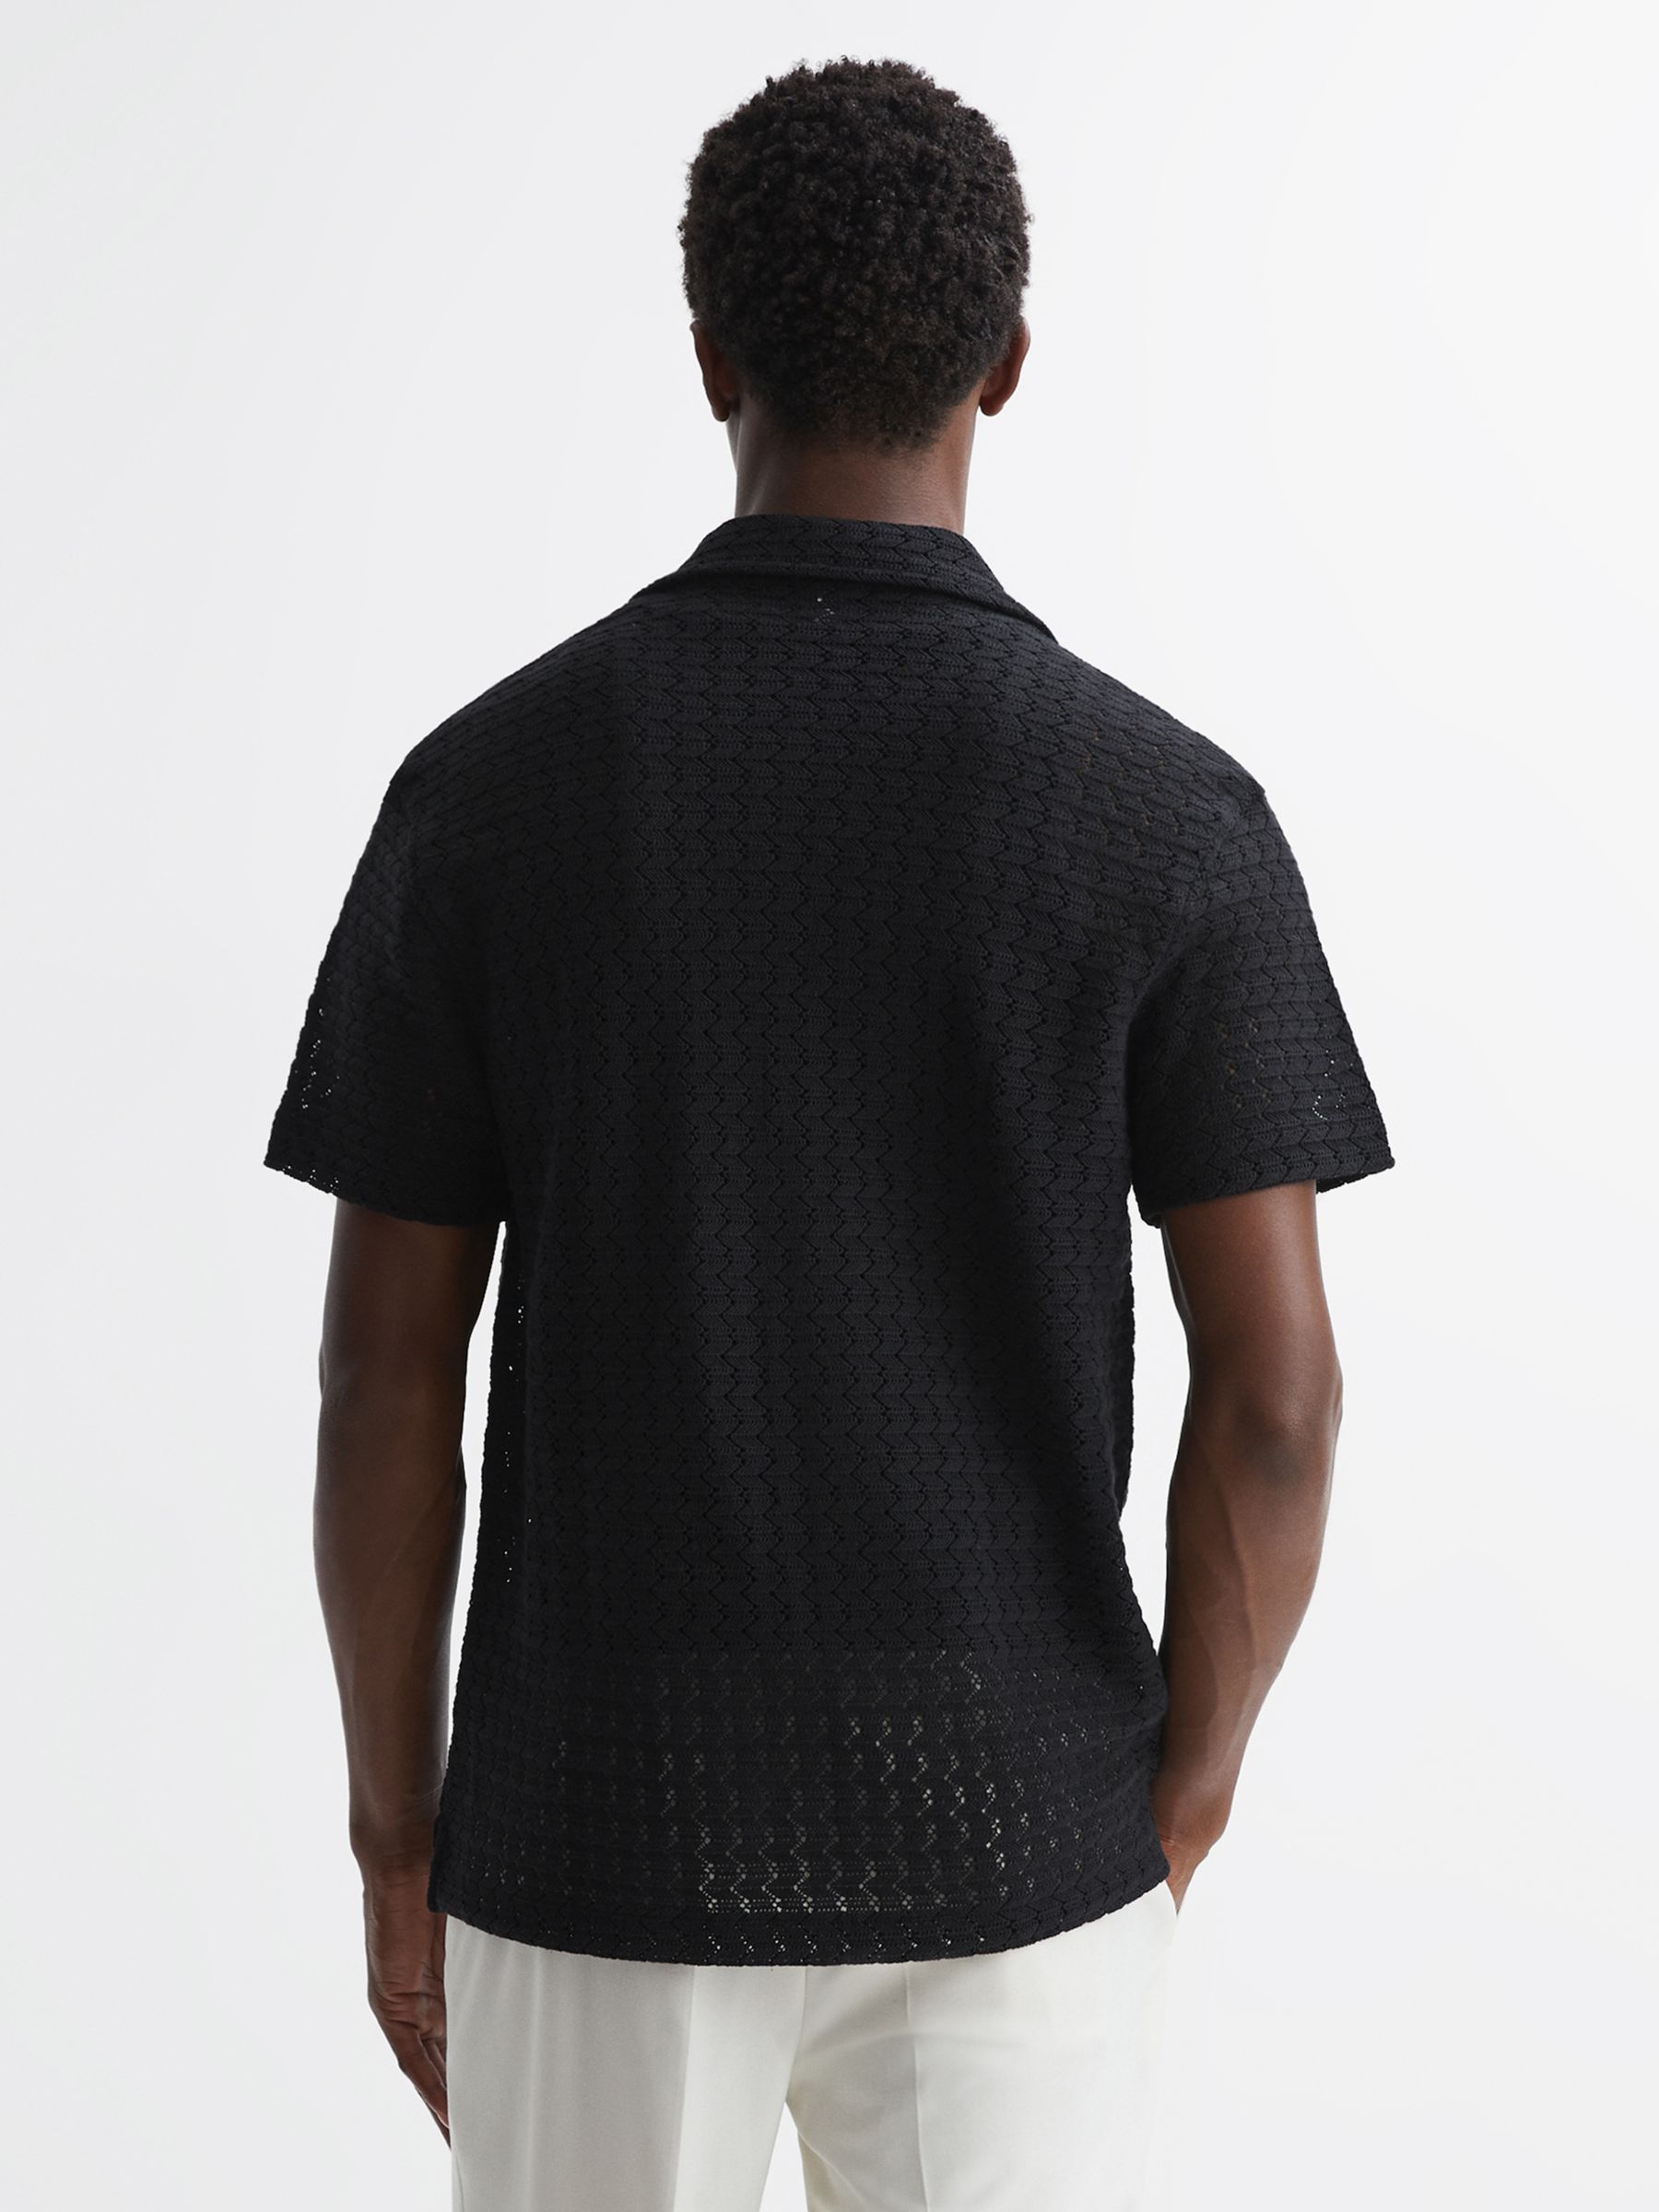 Reiss Scorpios Knitted Short Sleeve Shirt, Black at John Lewis & Partners